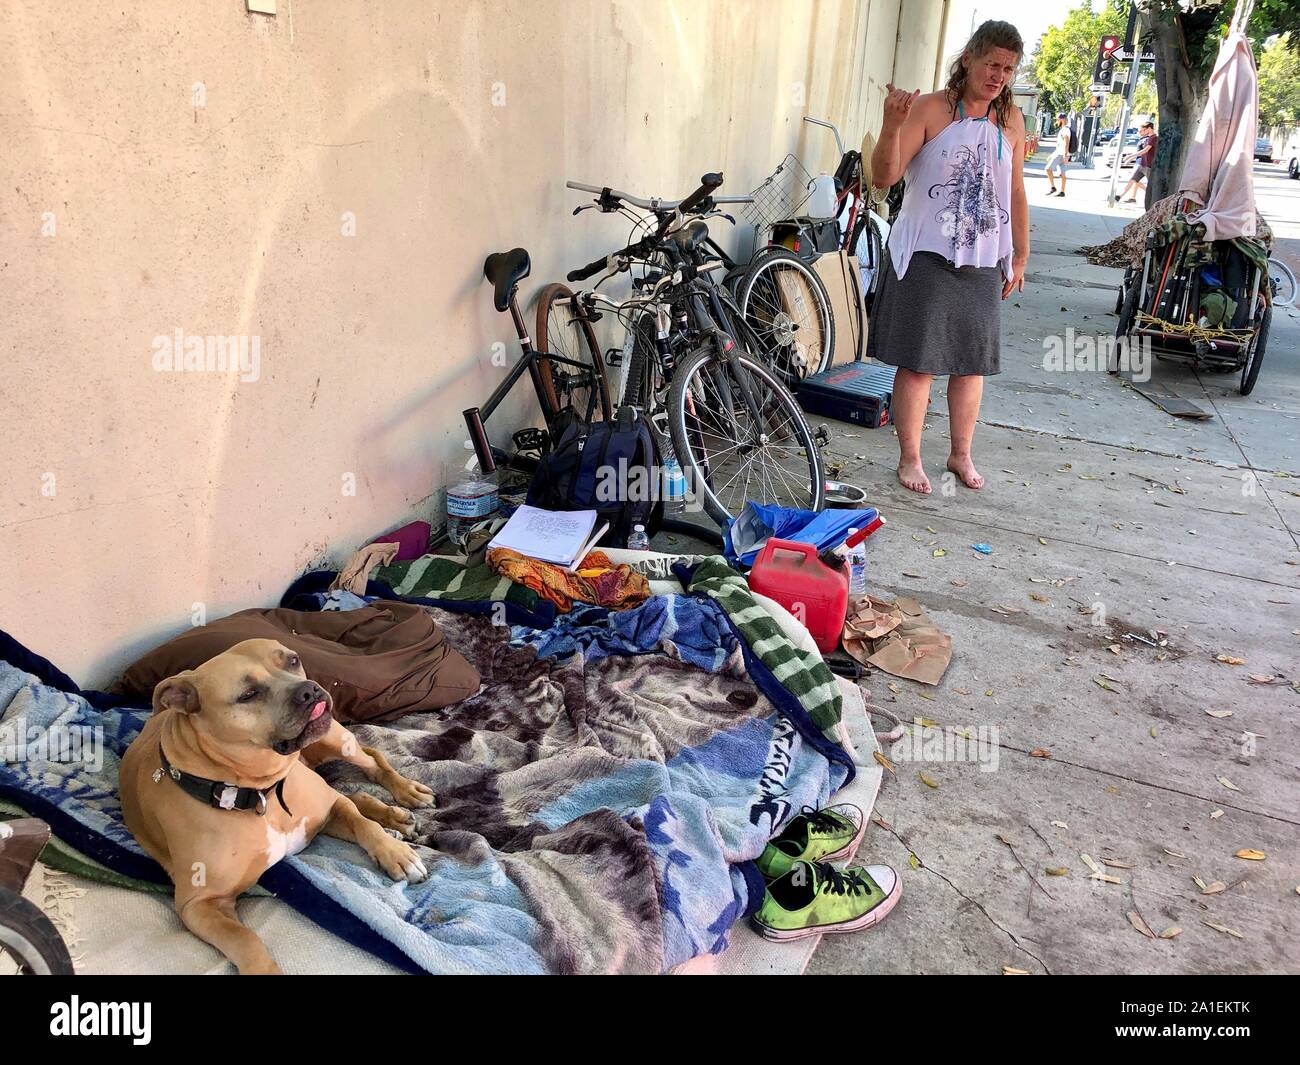 september-24-2019-santa-barbara-california-us-a-homeless-woman-and-her-dog-keep-guard-over-her-boyfriends-stuff-credit-image-amy-katzzuma-wire-2A1EKTK.jpg